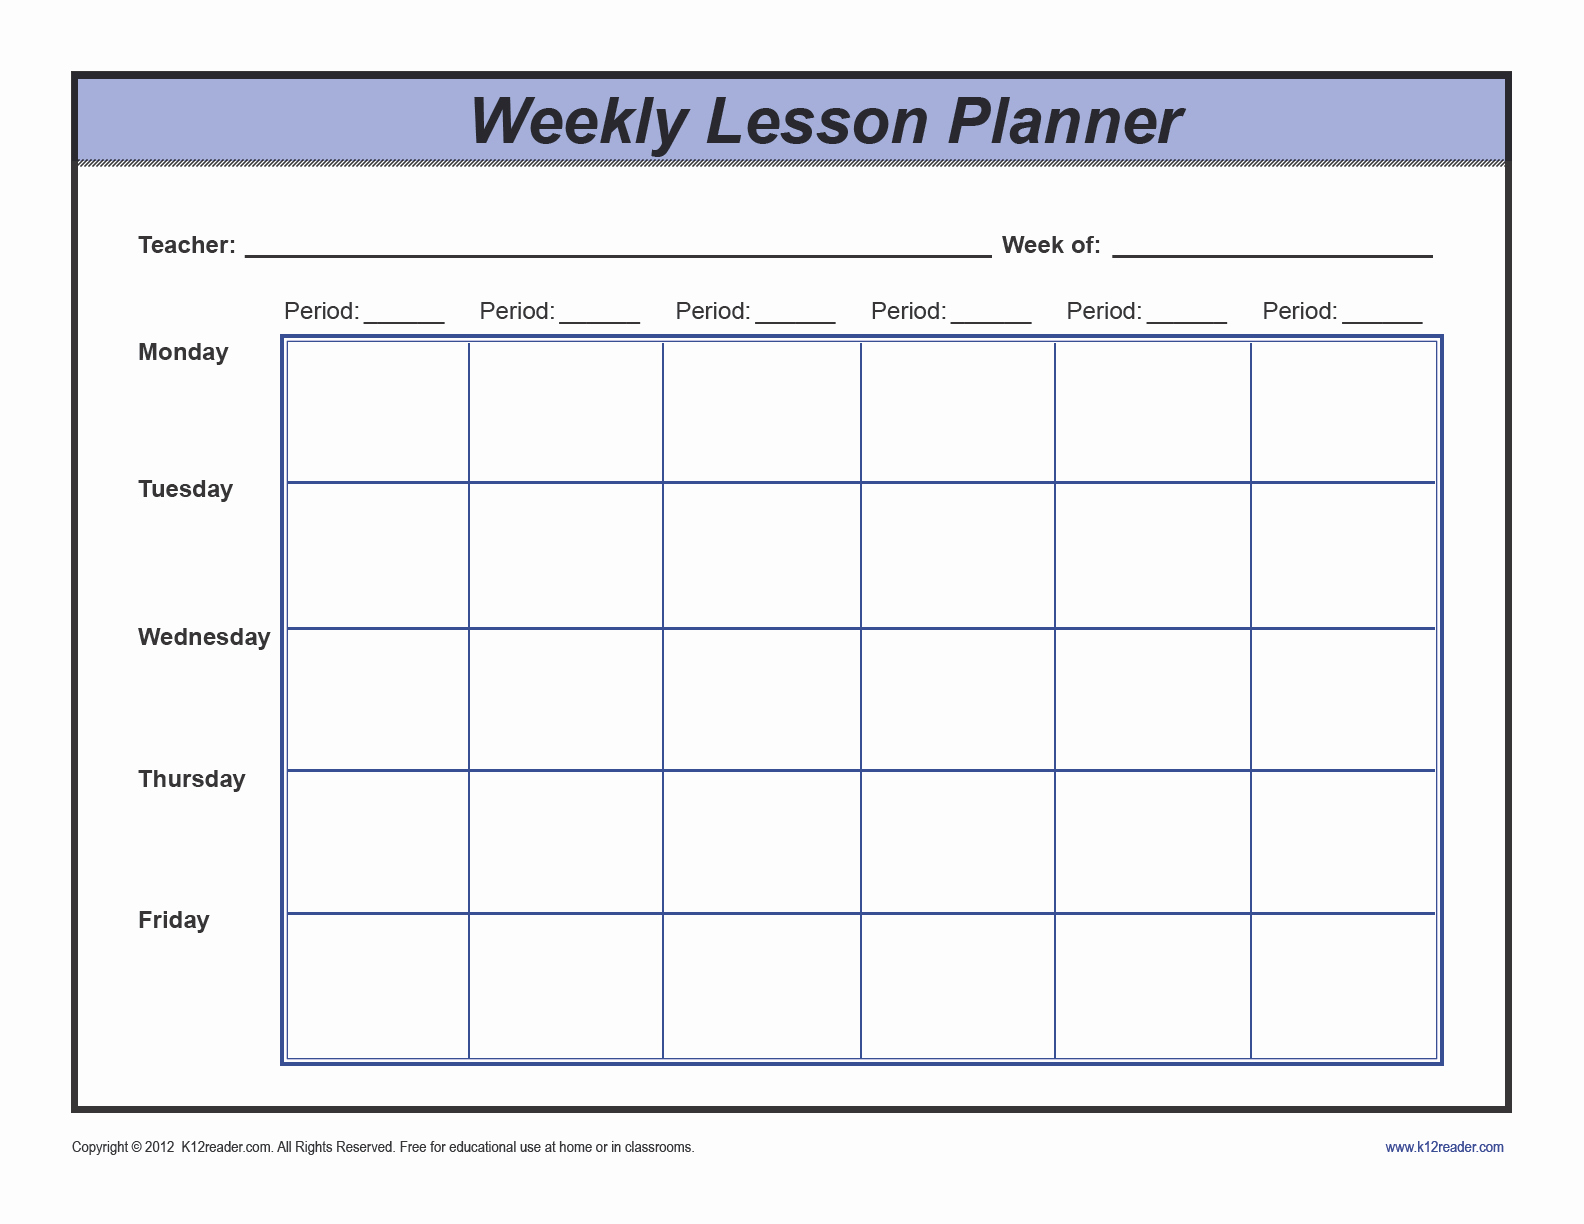 Preschool Lesson Plan Template Pdf Beautiful Download Weekly Lesson Plan Template Preschool